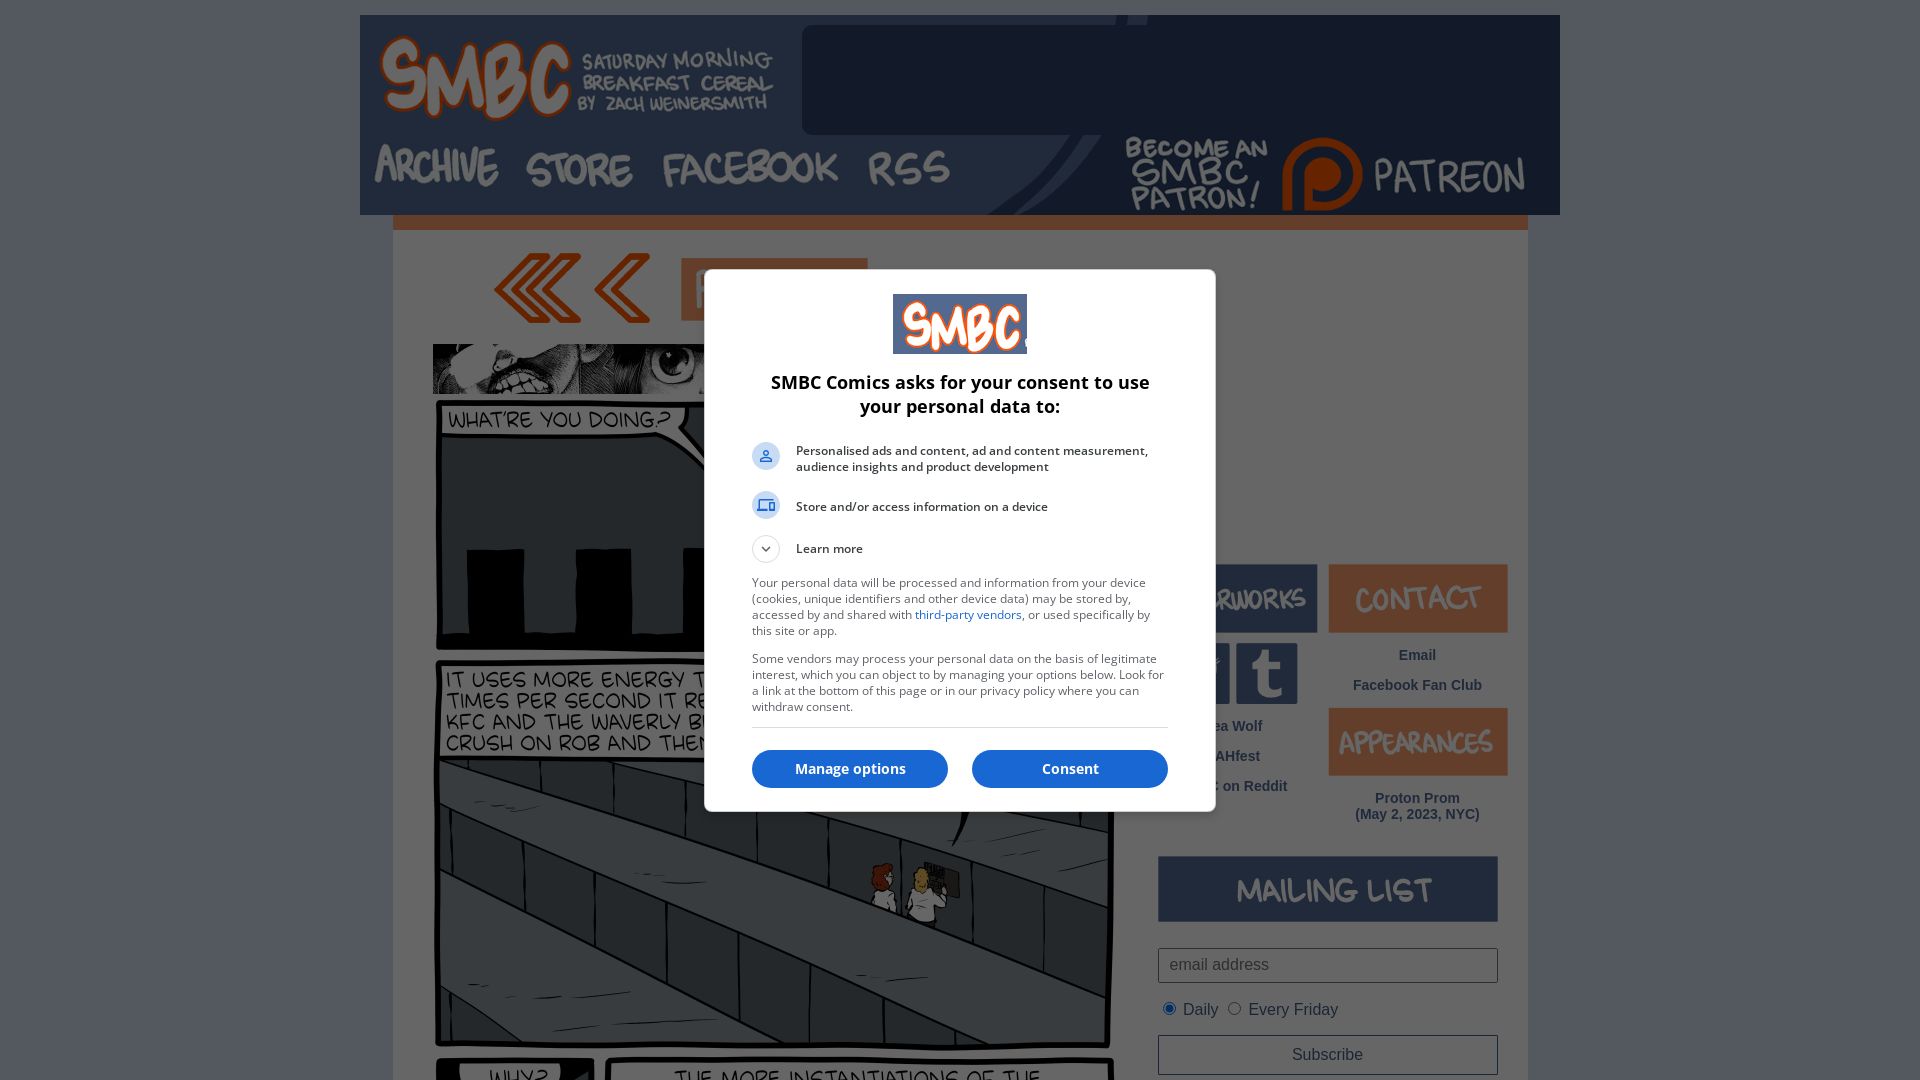 Website status smbc-comics.com is   ONLINE